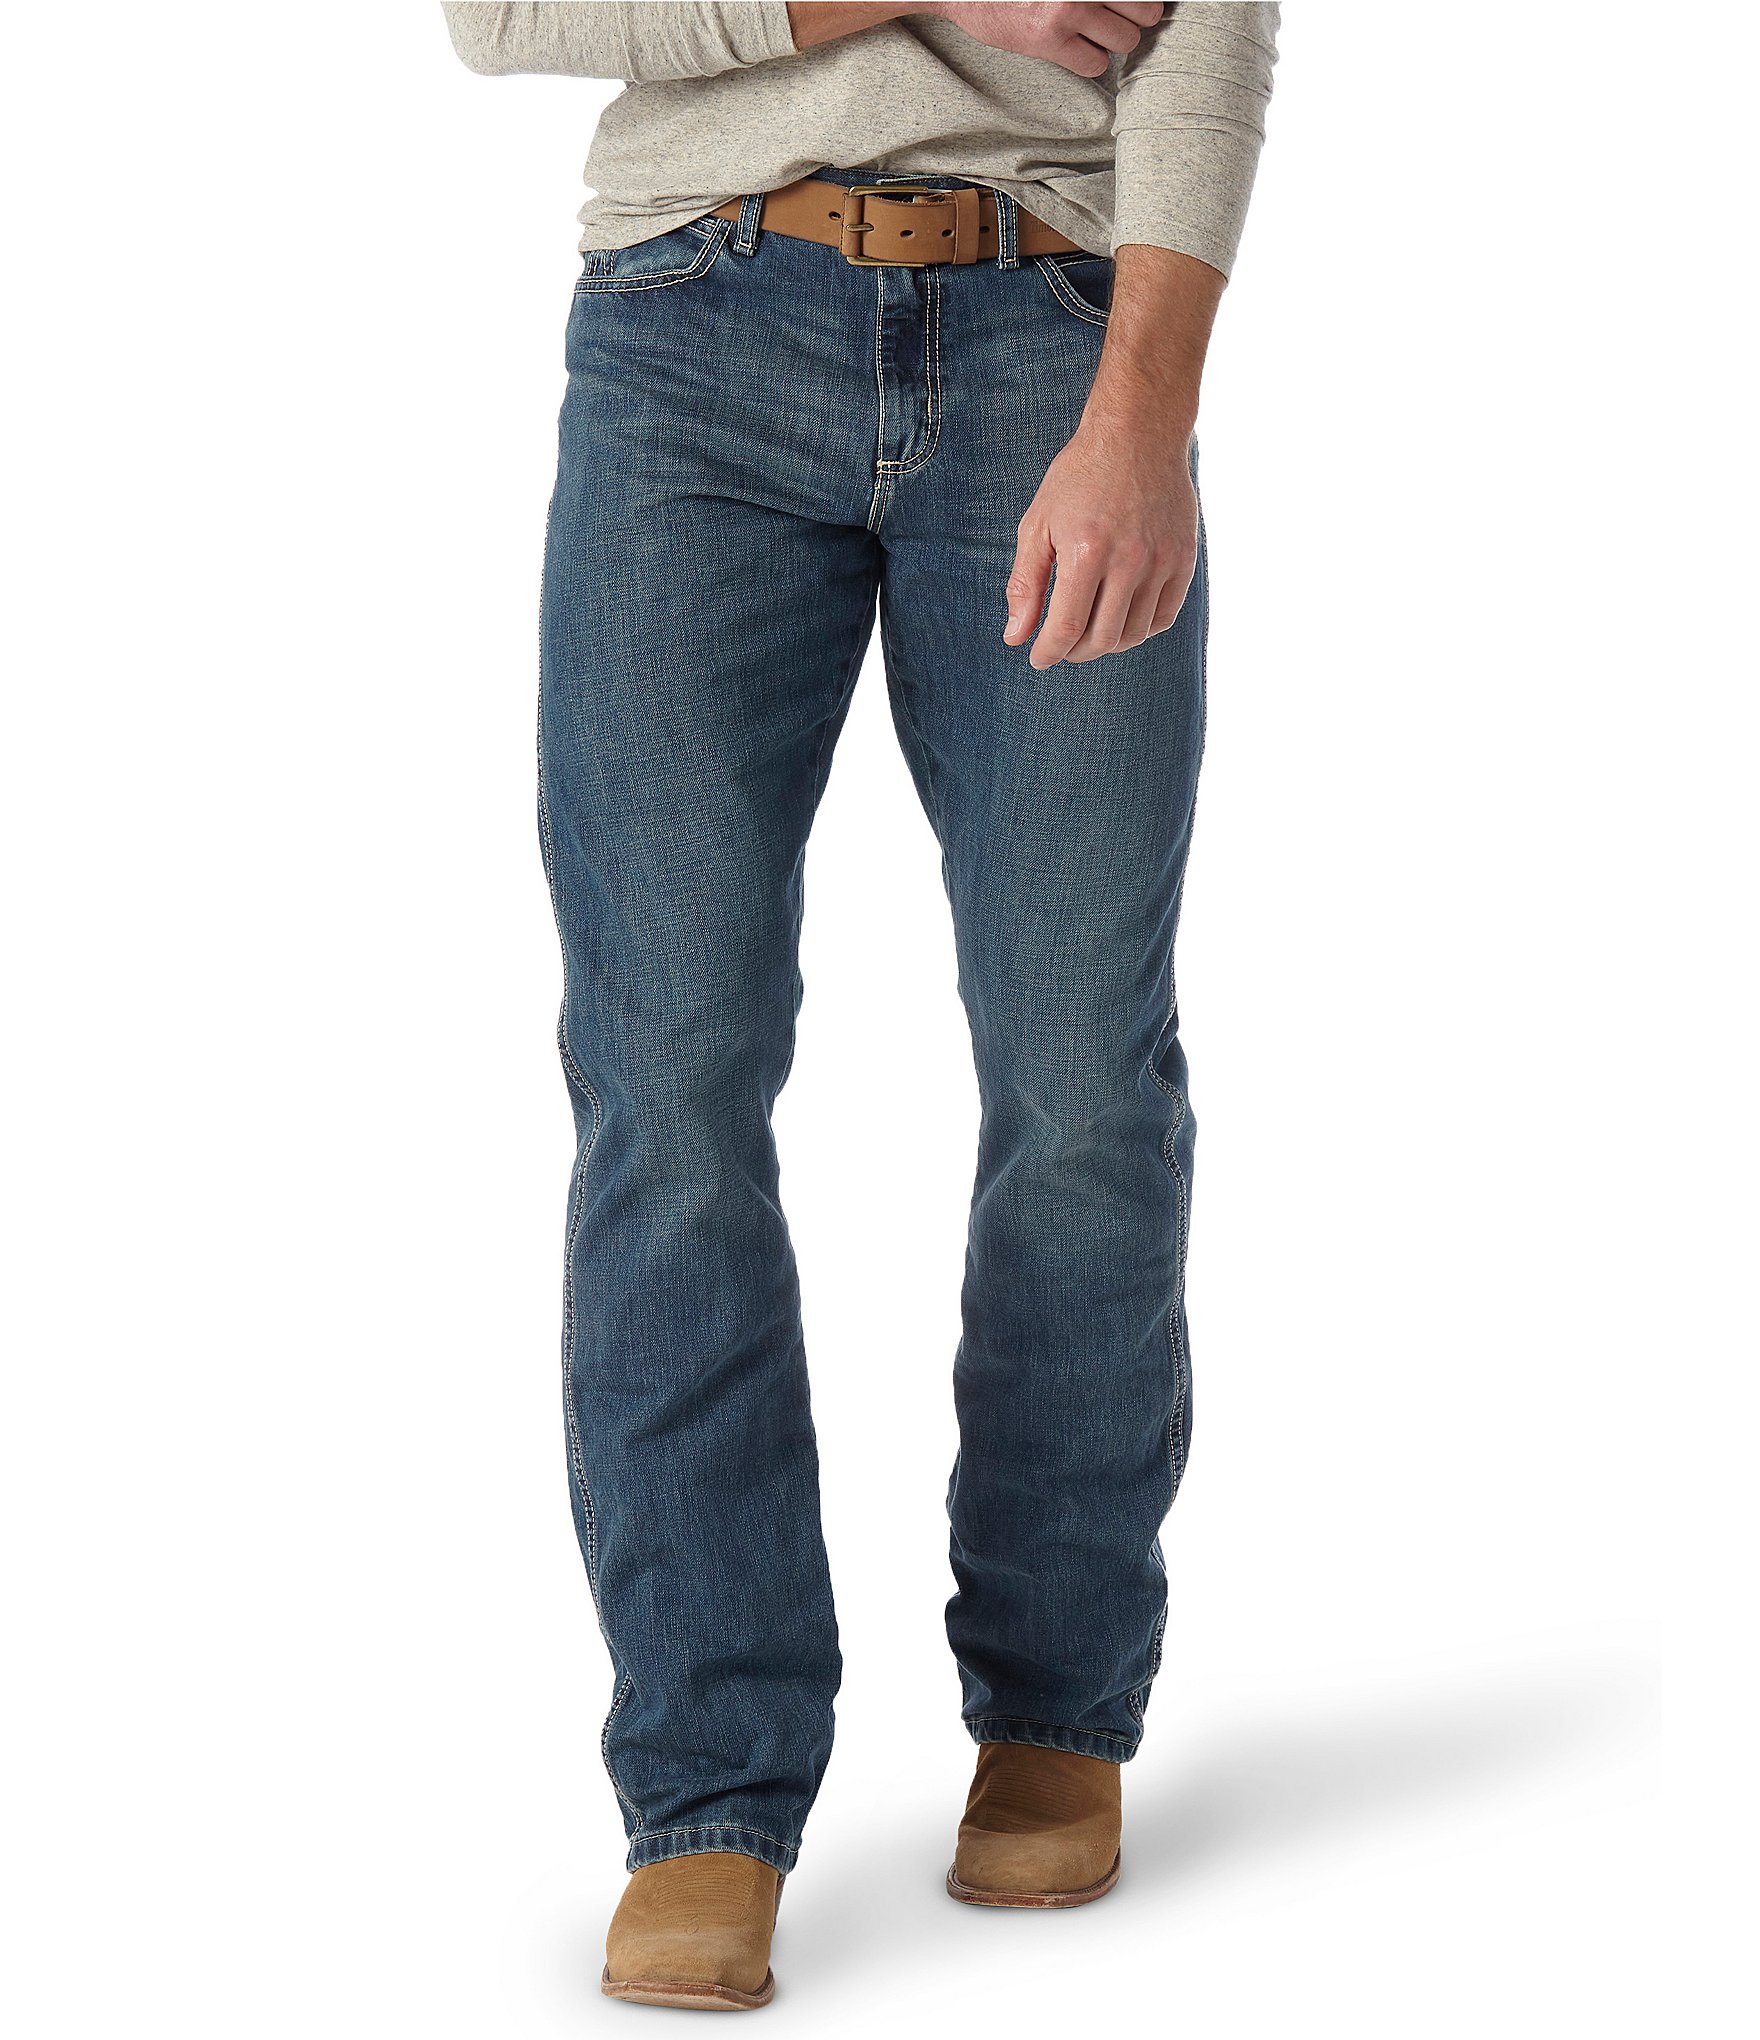 Wrangler® Regular Fit Western Denim Shirt